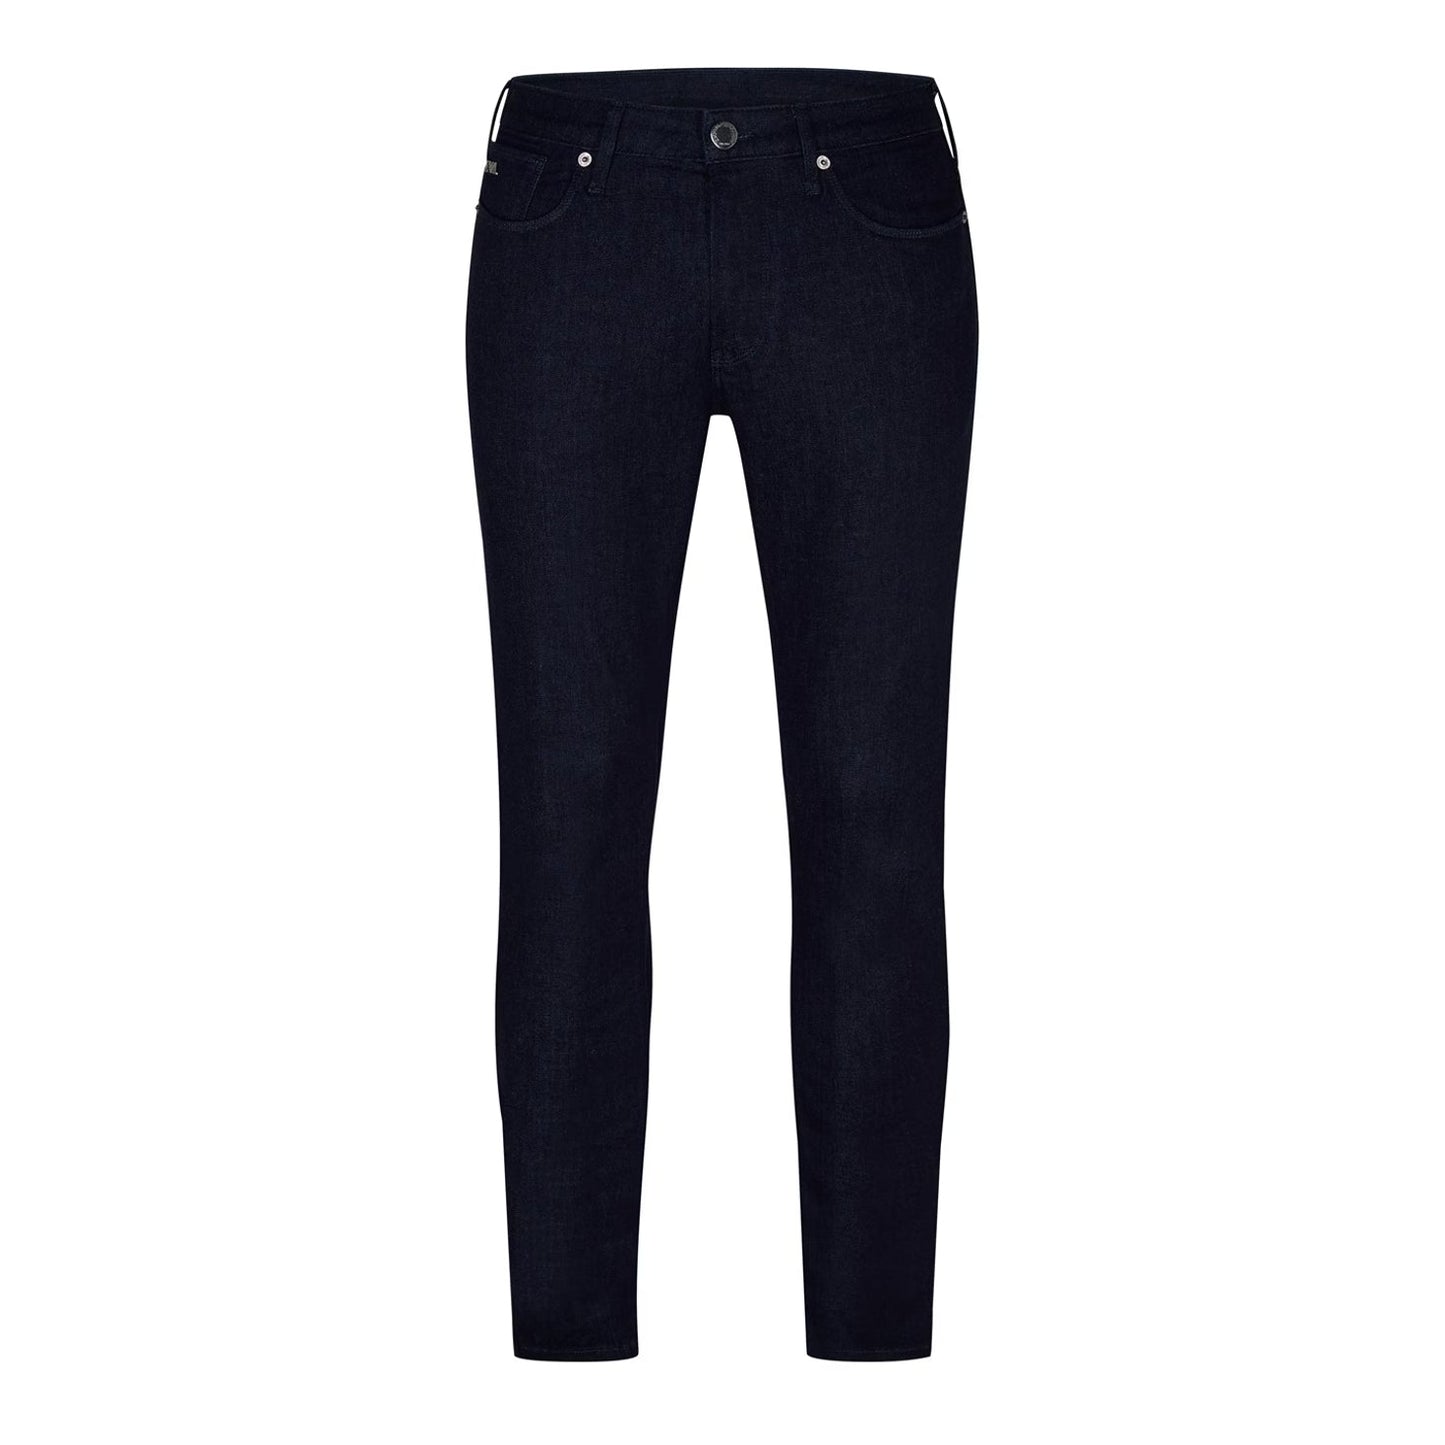 Emporio Armani 8N1J06 1G19Z Slim Fit Jeans - 0941 Denim Blue - Escape Menswear